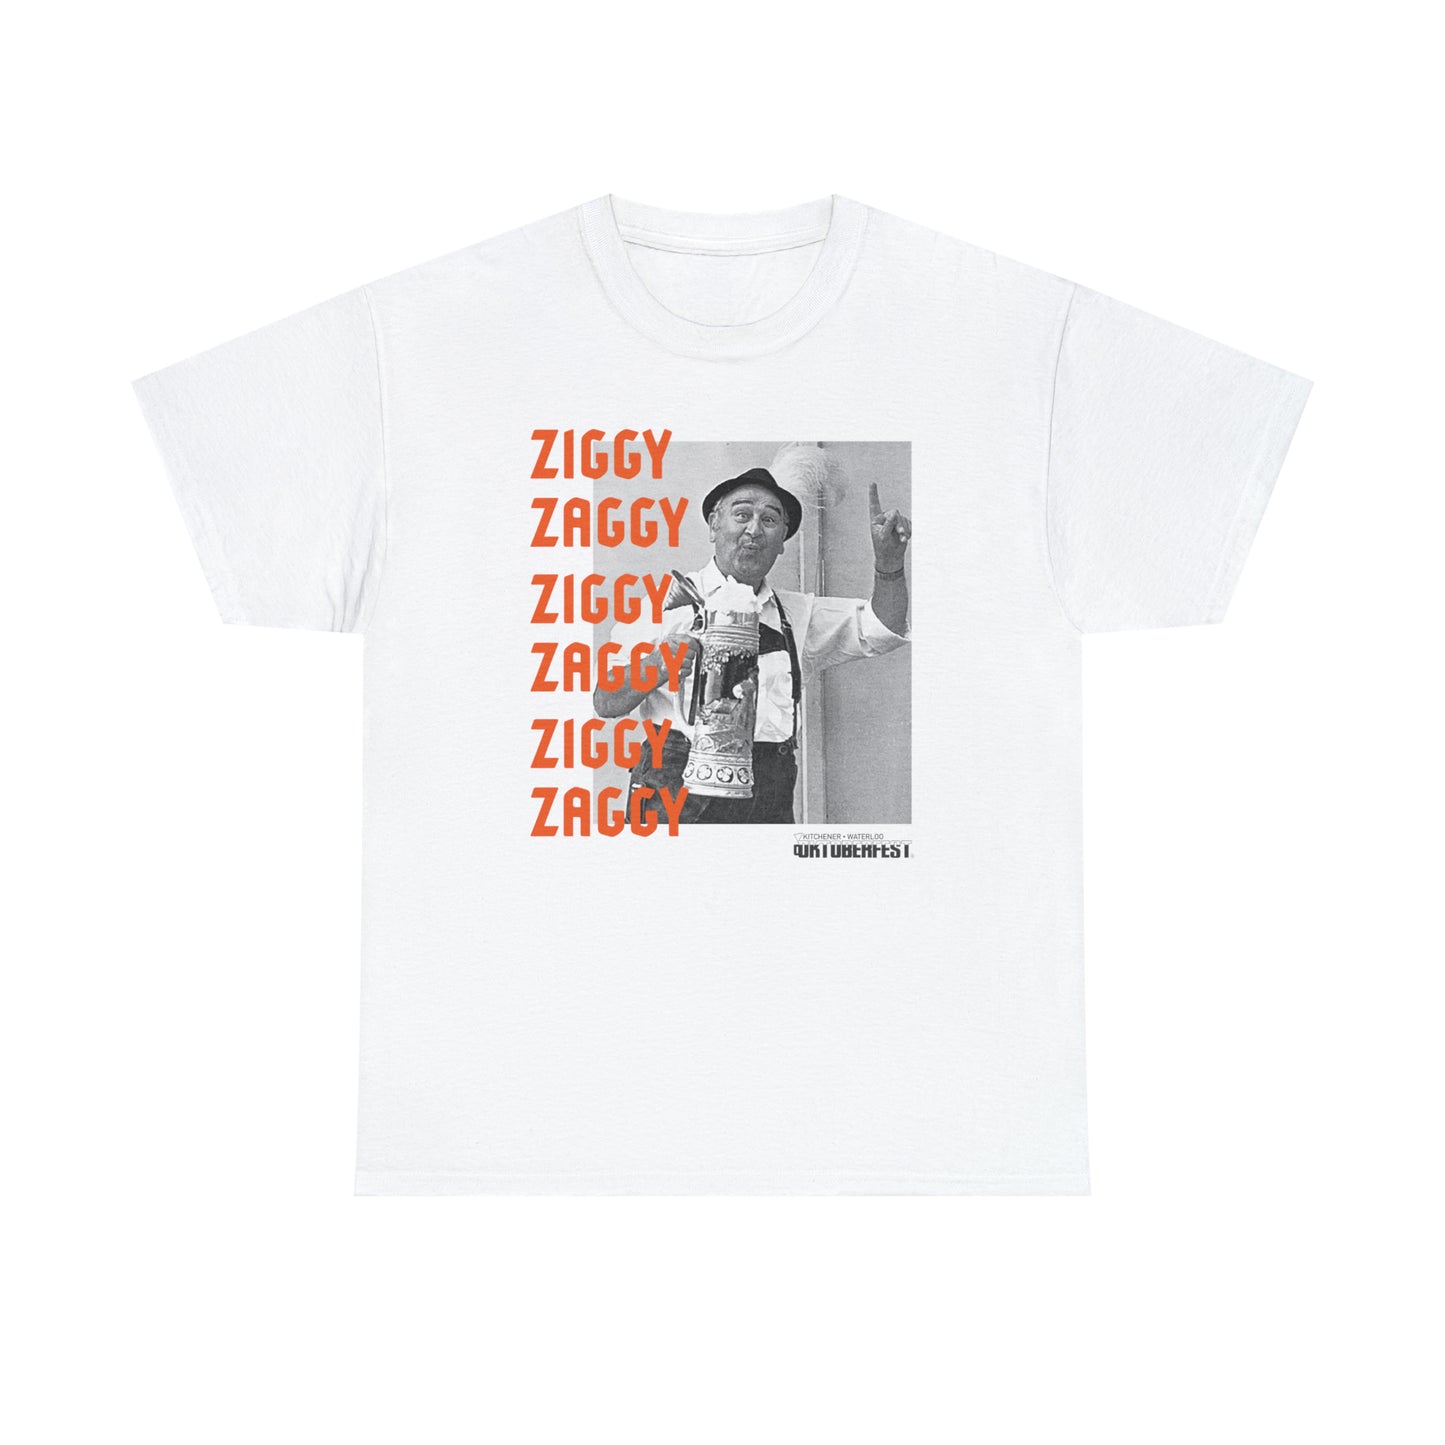 Ziggy Zaggy — Ist Wunderbar Man